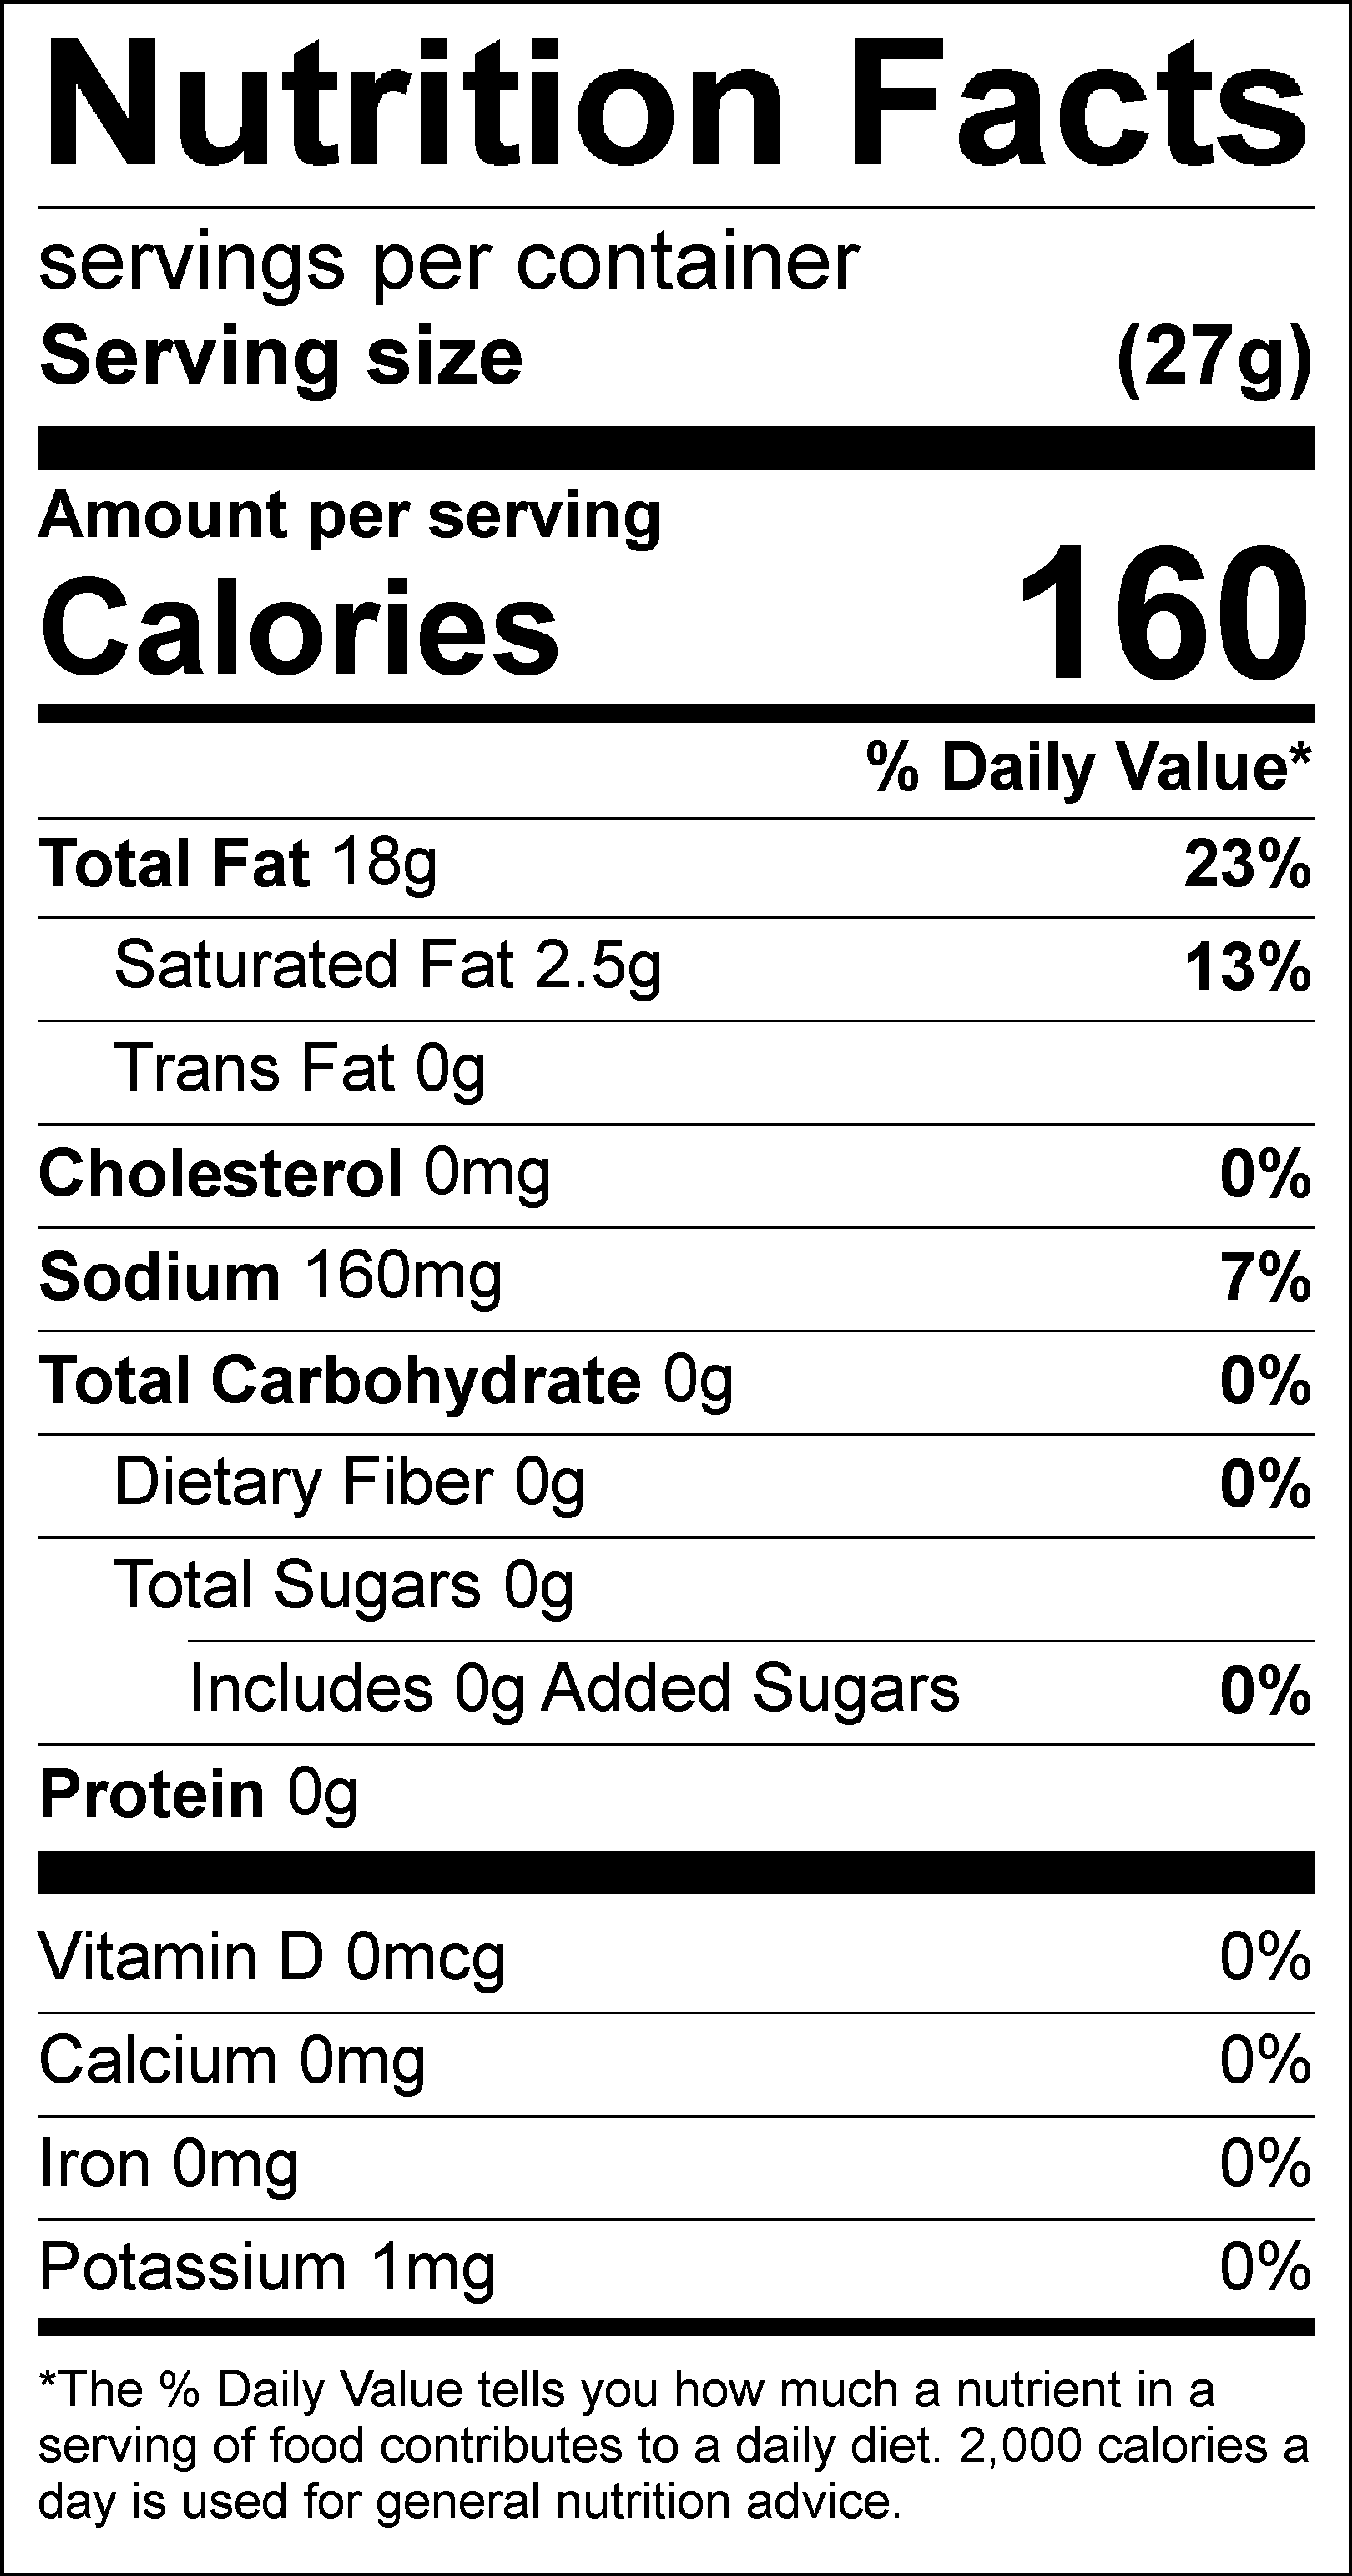 Nutrition Facts Label for Easy Viniagrette